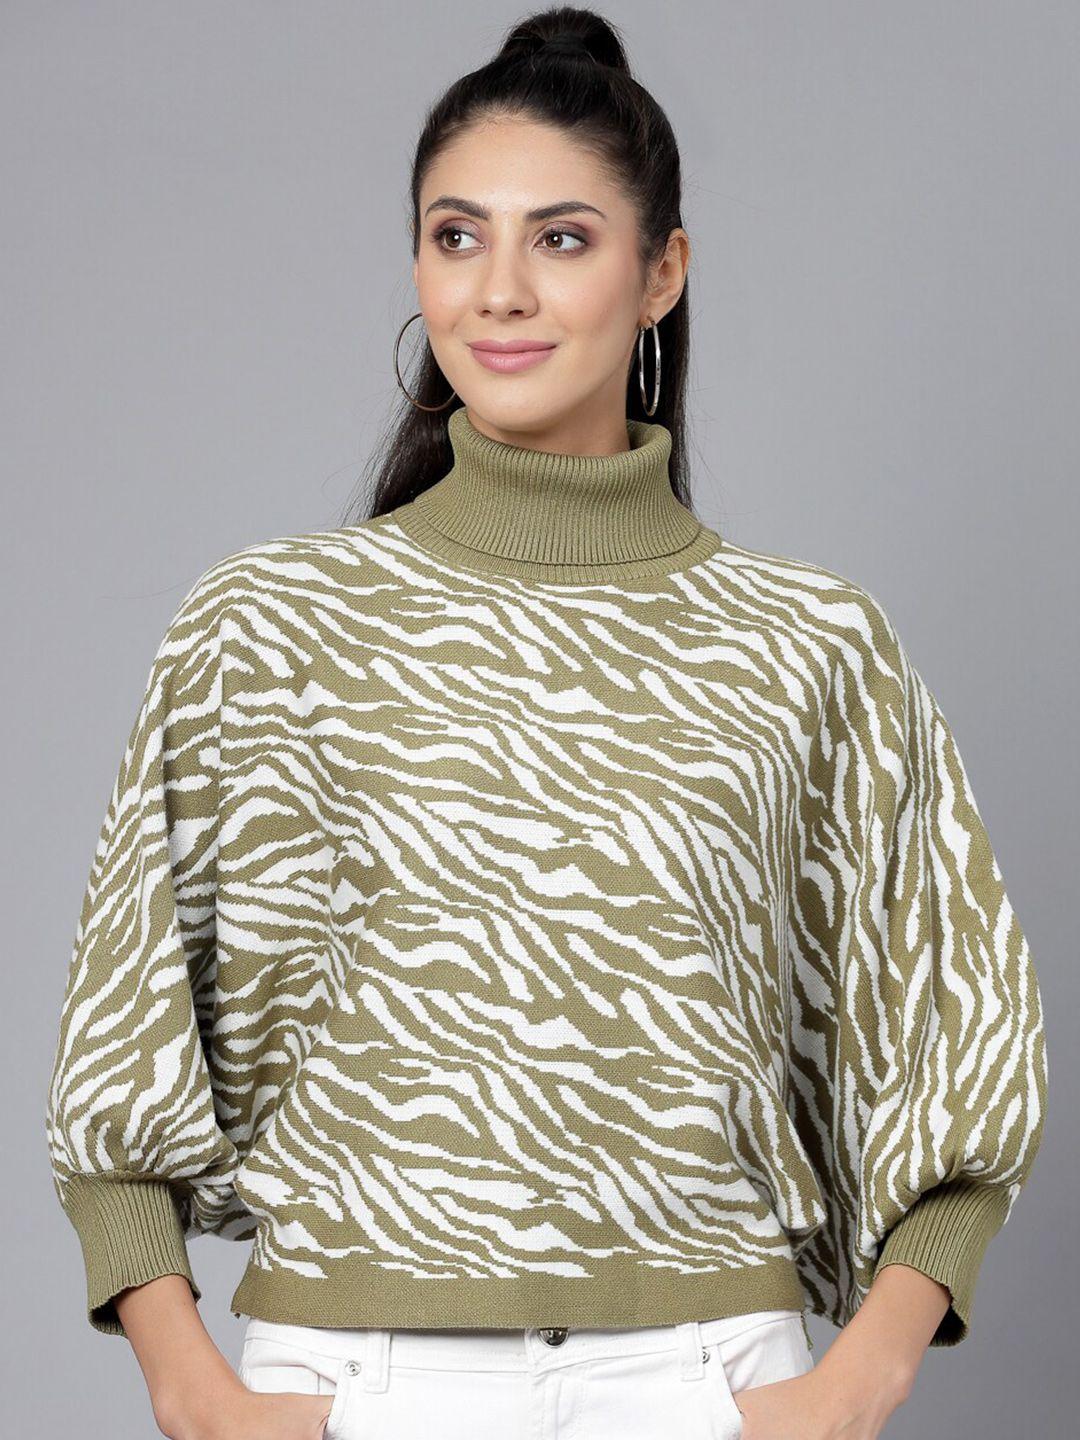 mafadeny animal printed turtle neck pullover sweater